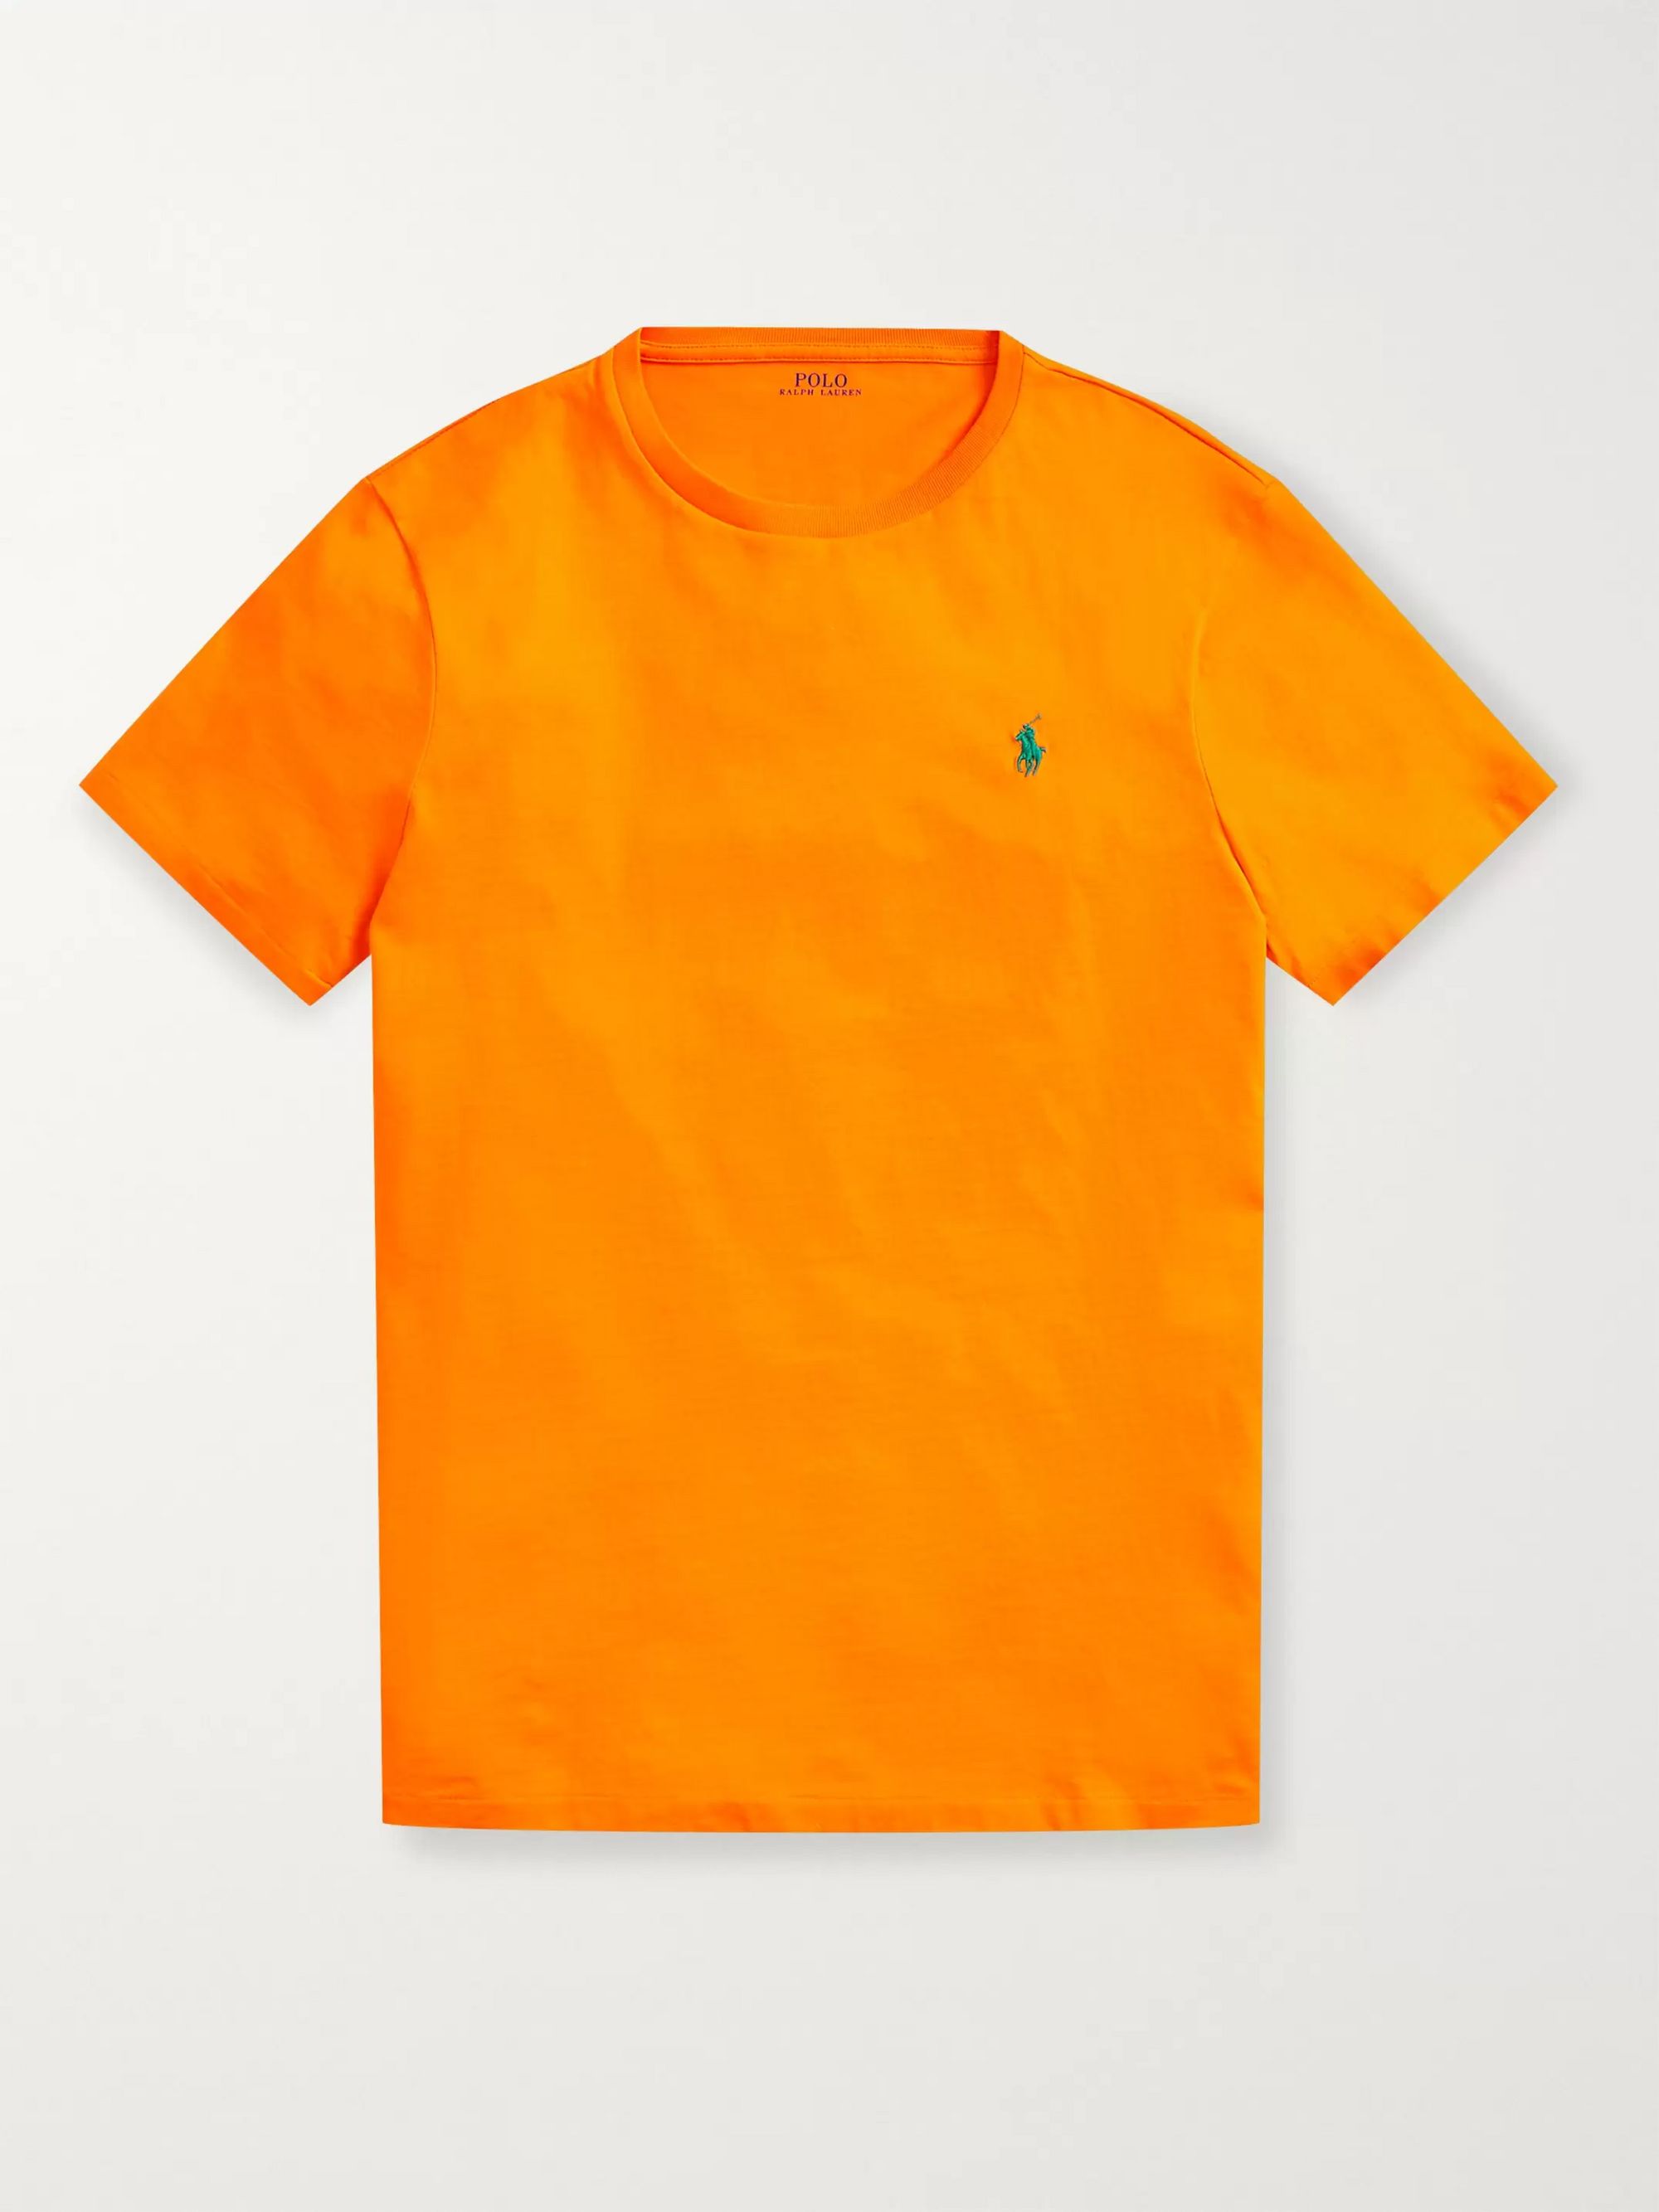 jersey orange